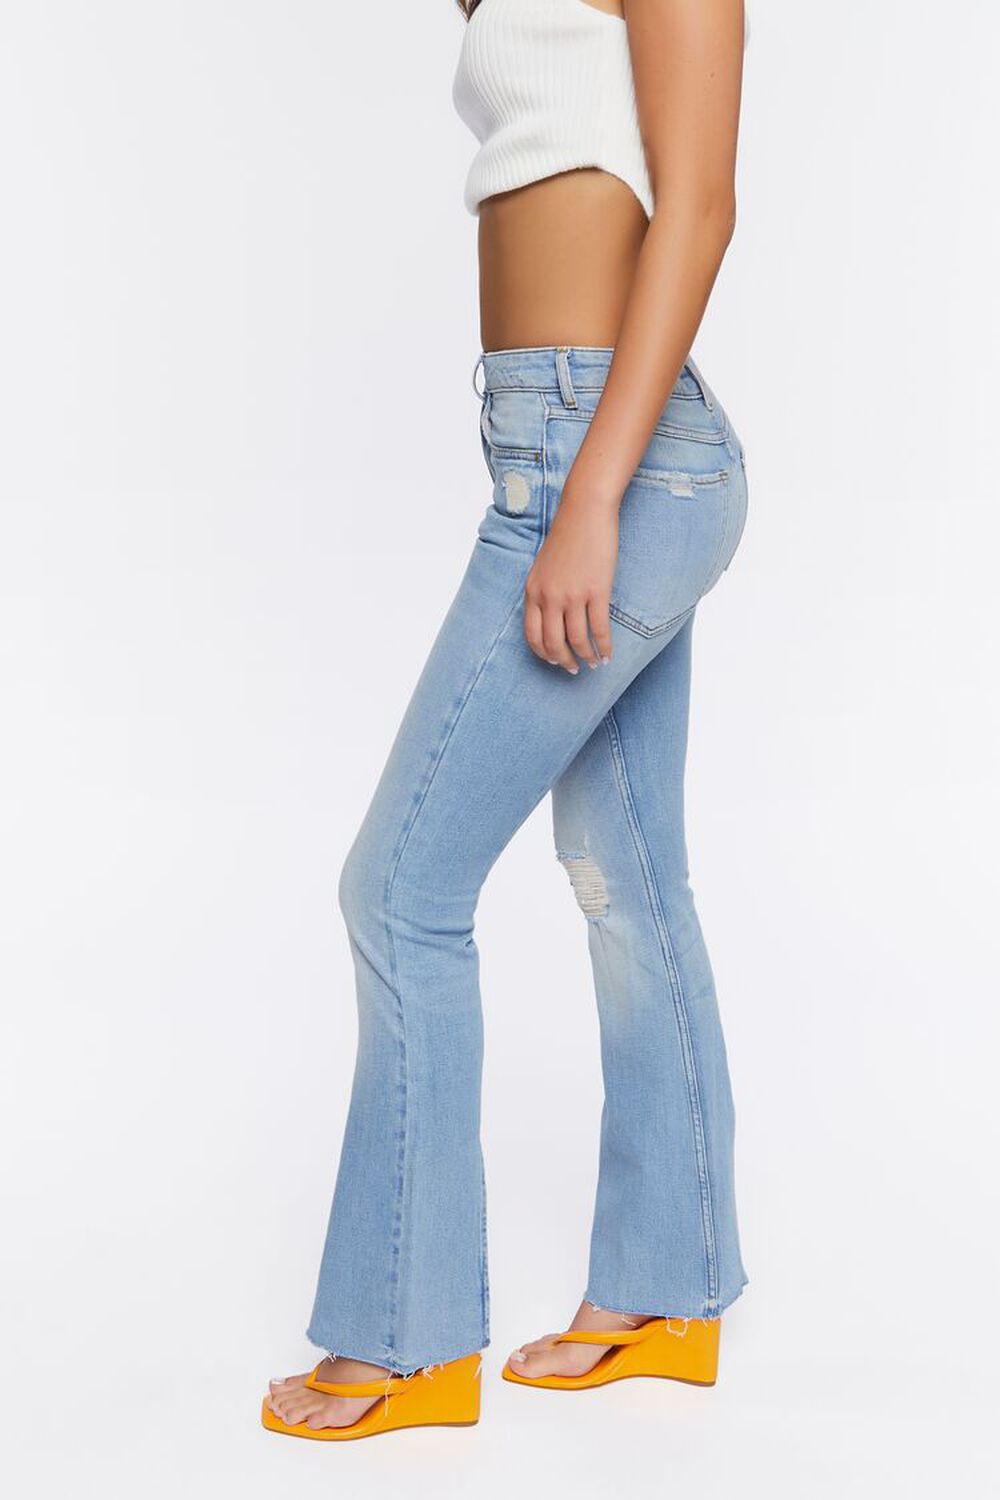 MEDIUM DENIM Hemp 10% High-Rise Bootcut Distressed Jeans, image 3